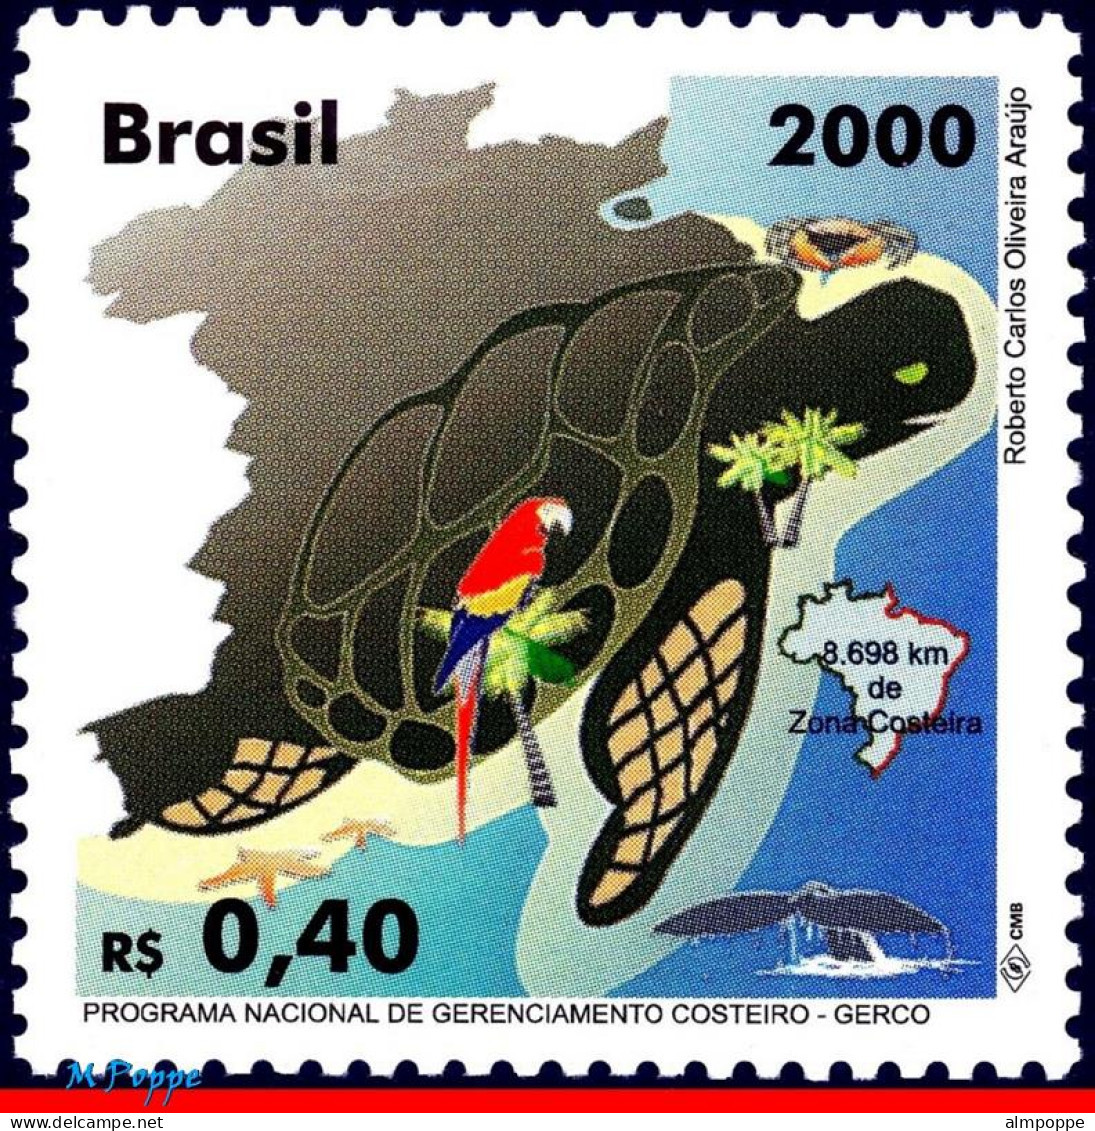 Ref. BR-2742 BRAZIL 2000 - GERCO, COASTAL ZONE,PARROT, TURTLE, WHALE, MI# 3028, MNH, MAPS 1V Sc# 2742 - Ungebraucht